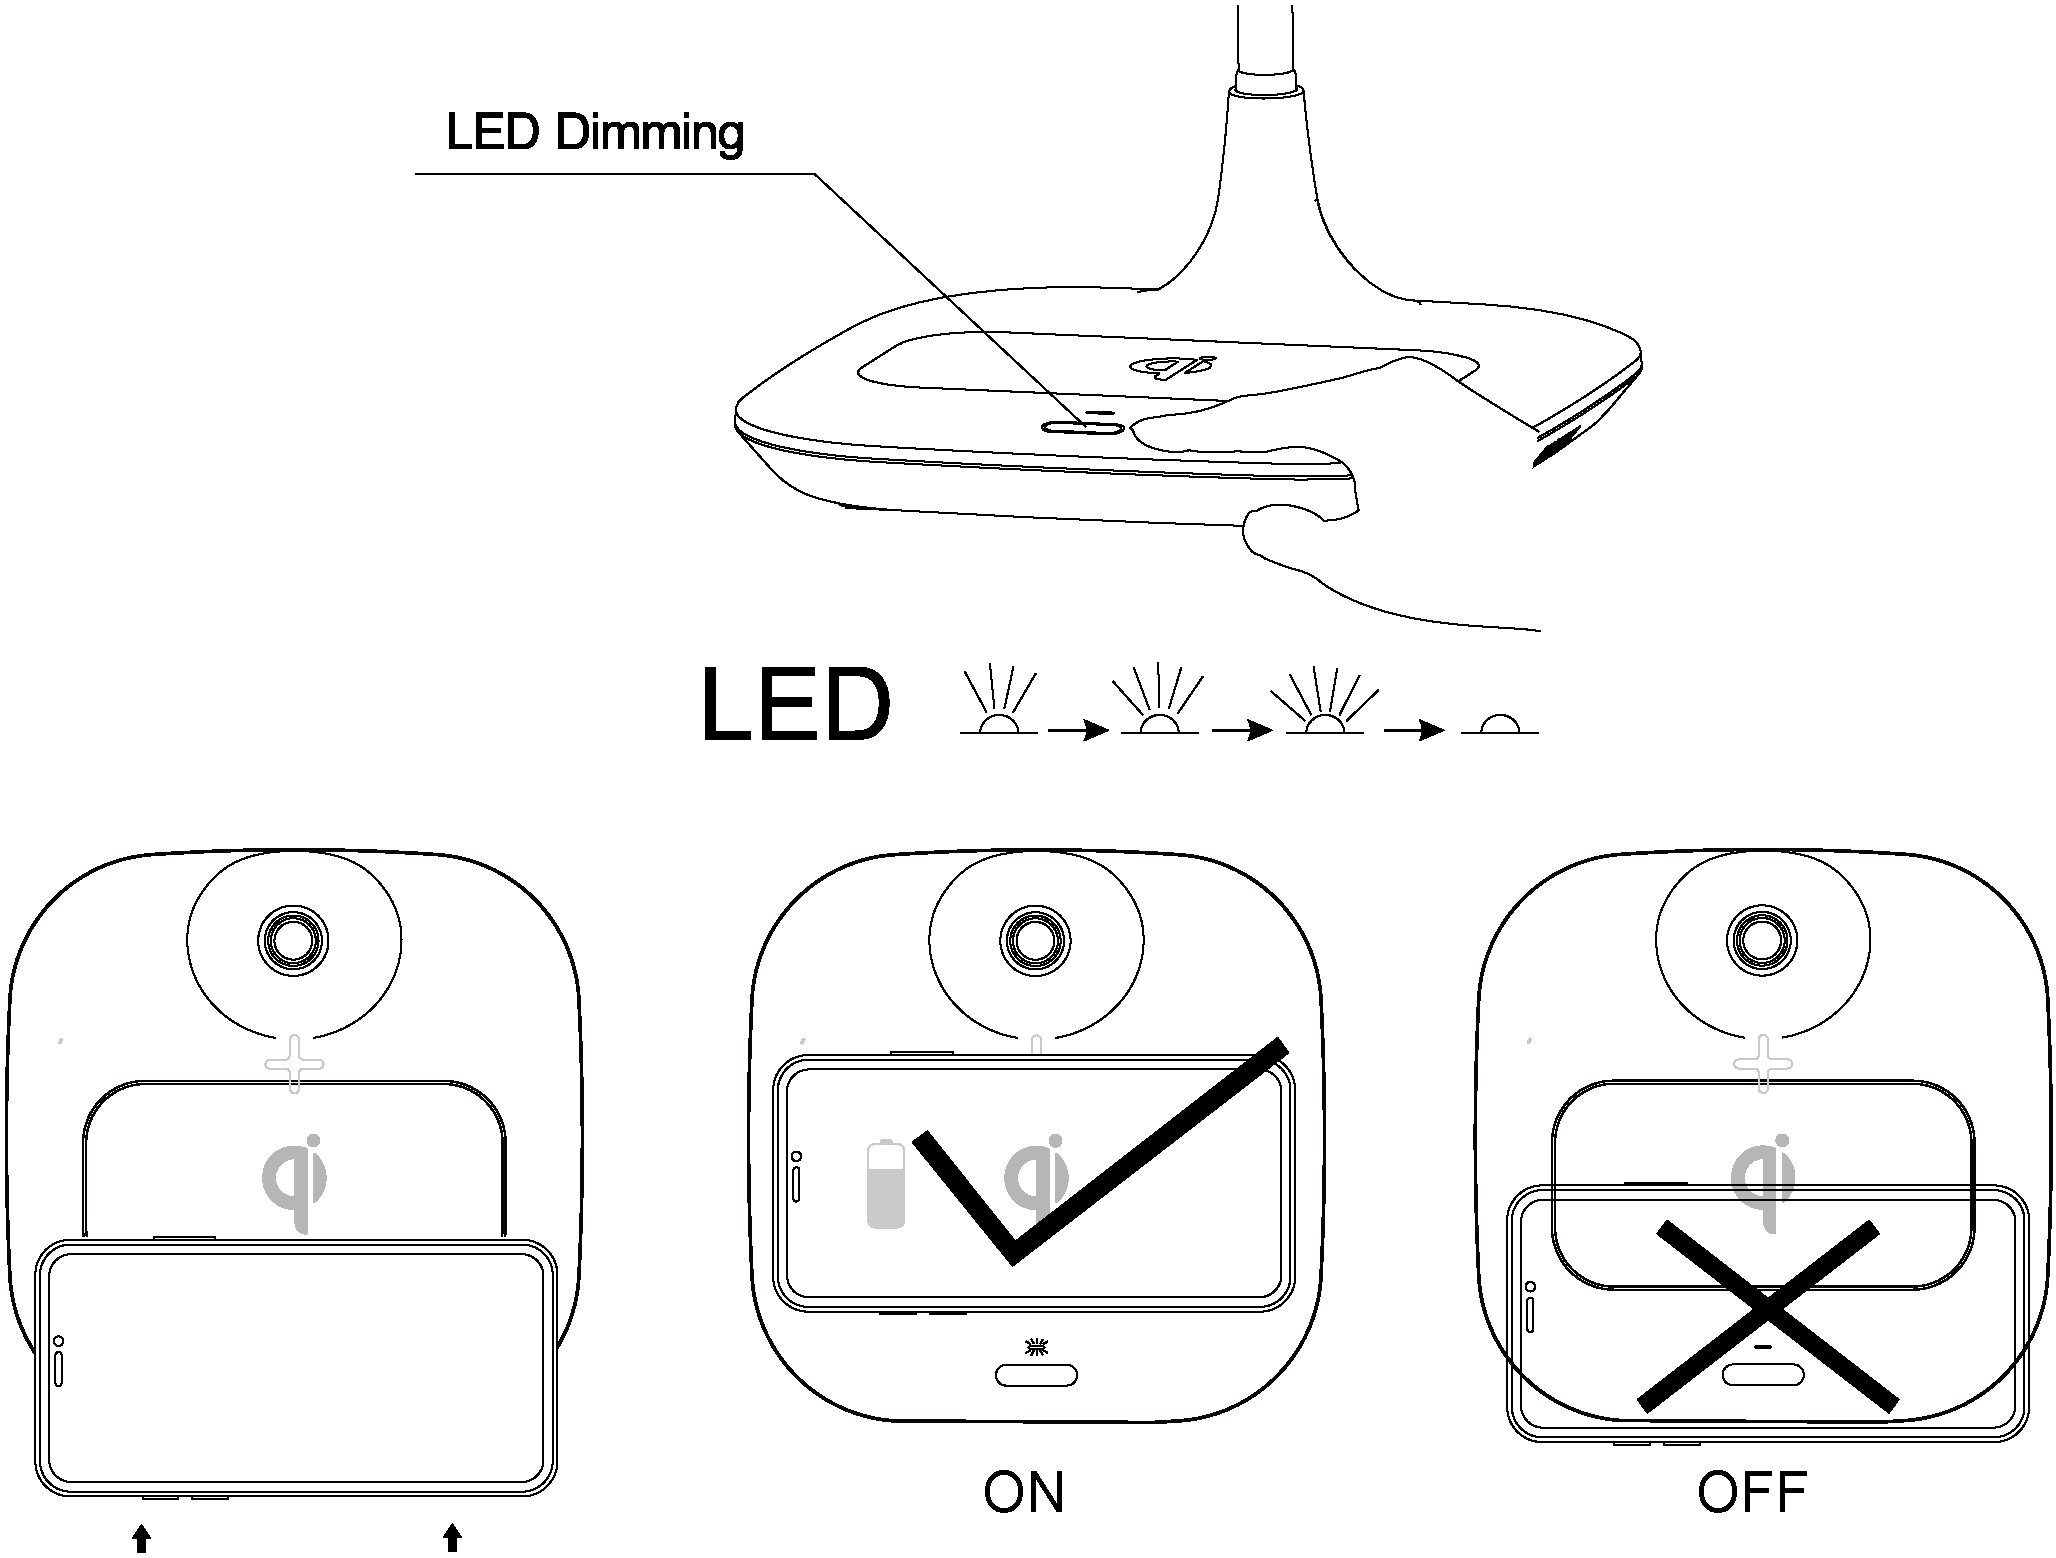 EGLO Tischleuchte 3-step fest QI-charger Neutralweiß, integriert, MASSERIE, dimming, Dimmfunktion, LED